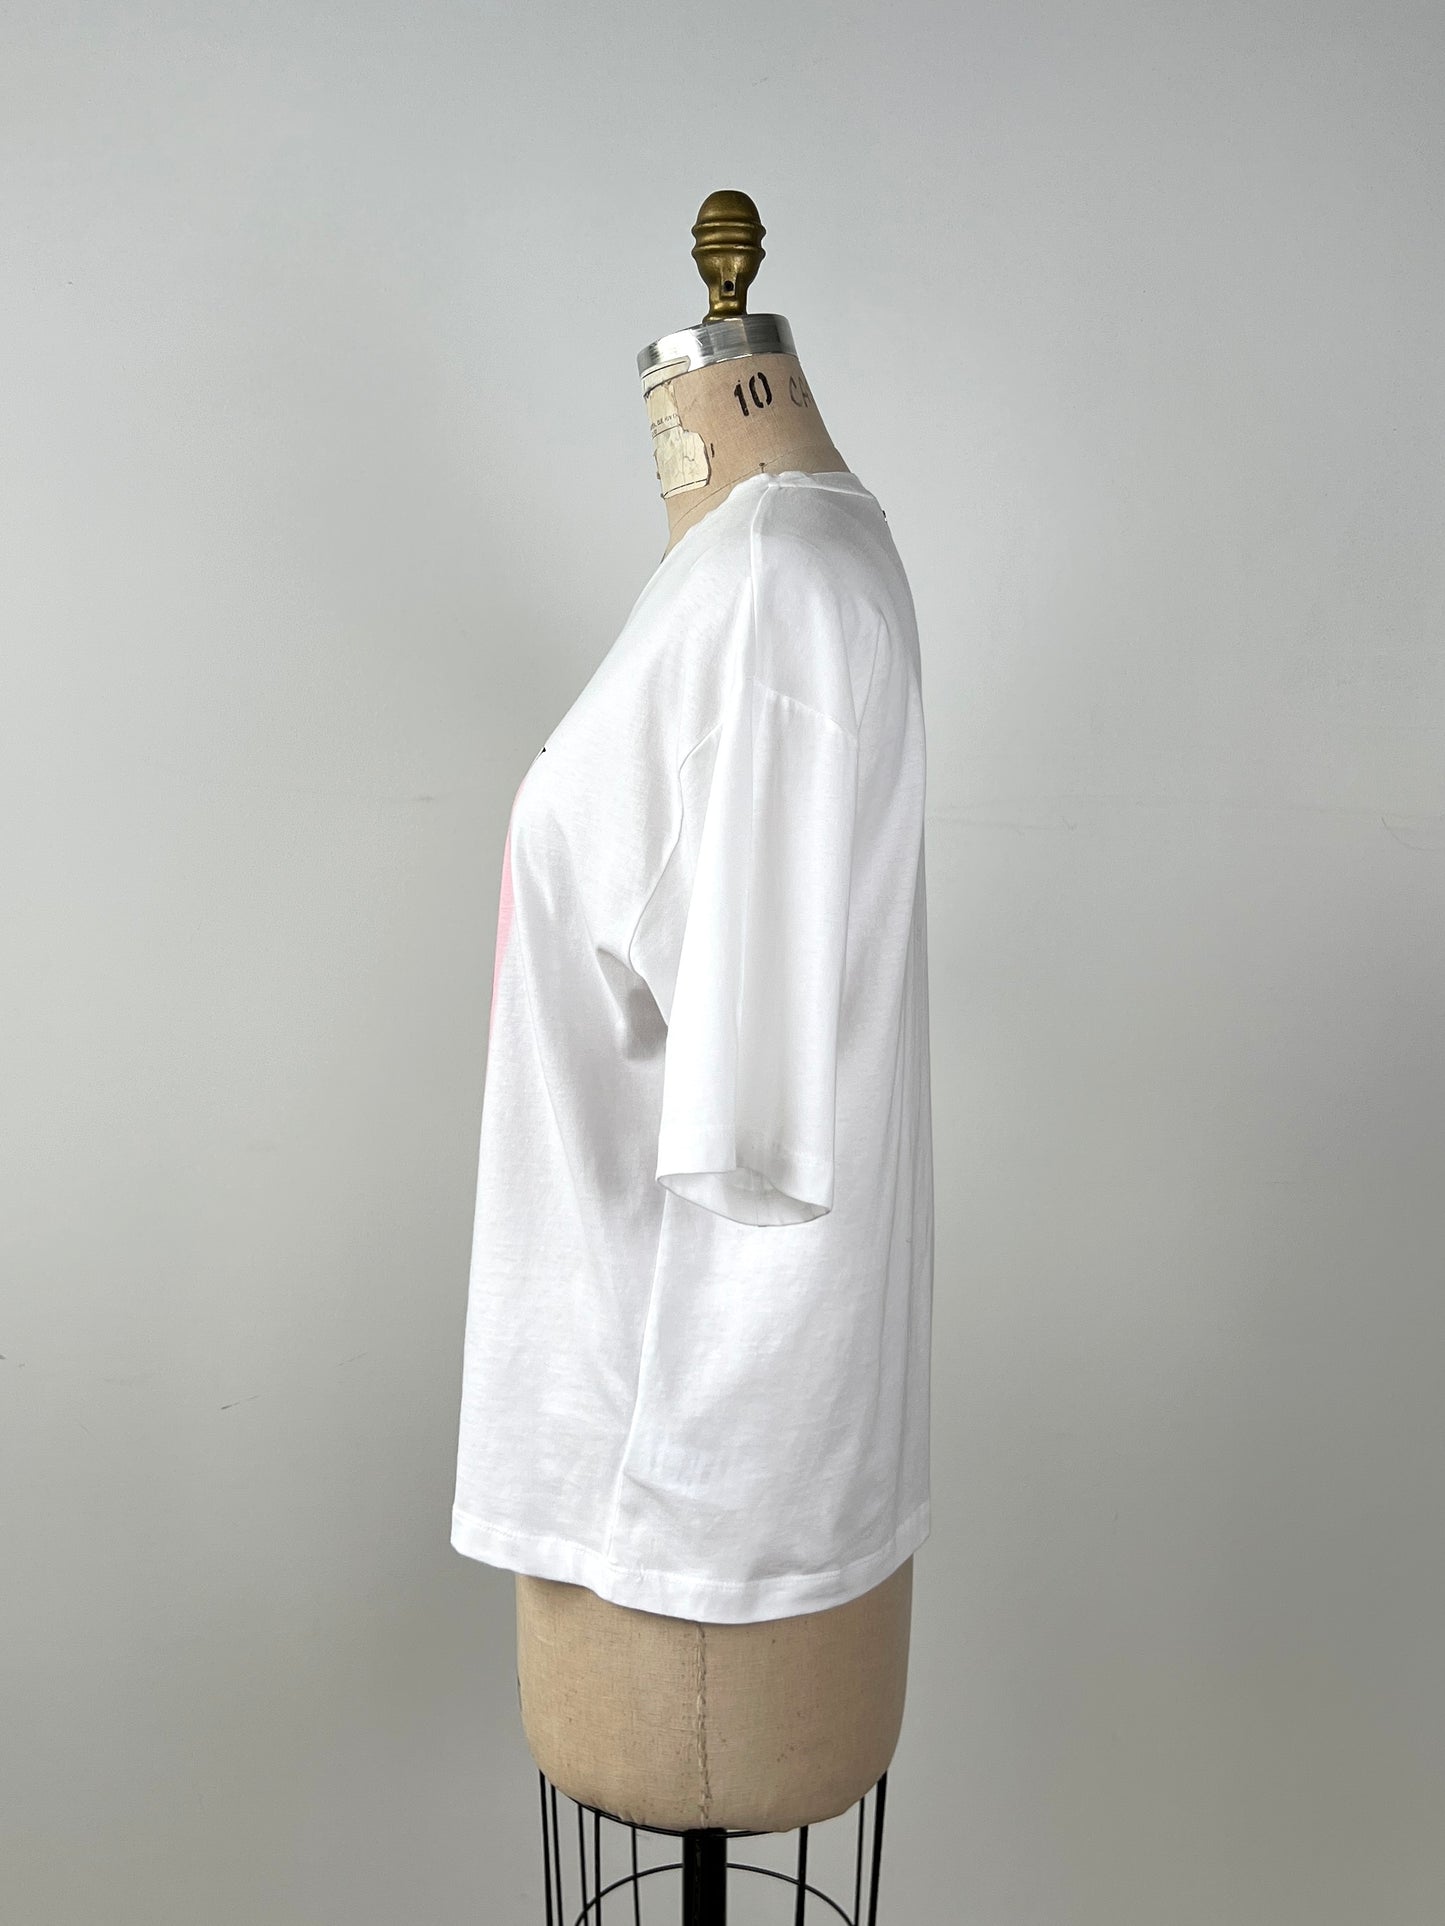 T-shirt blanc imprimé " CHERRY SUMMER" IMP* (S)